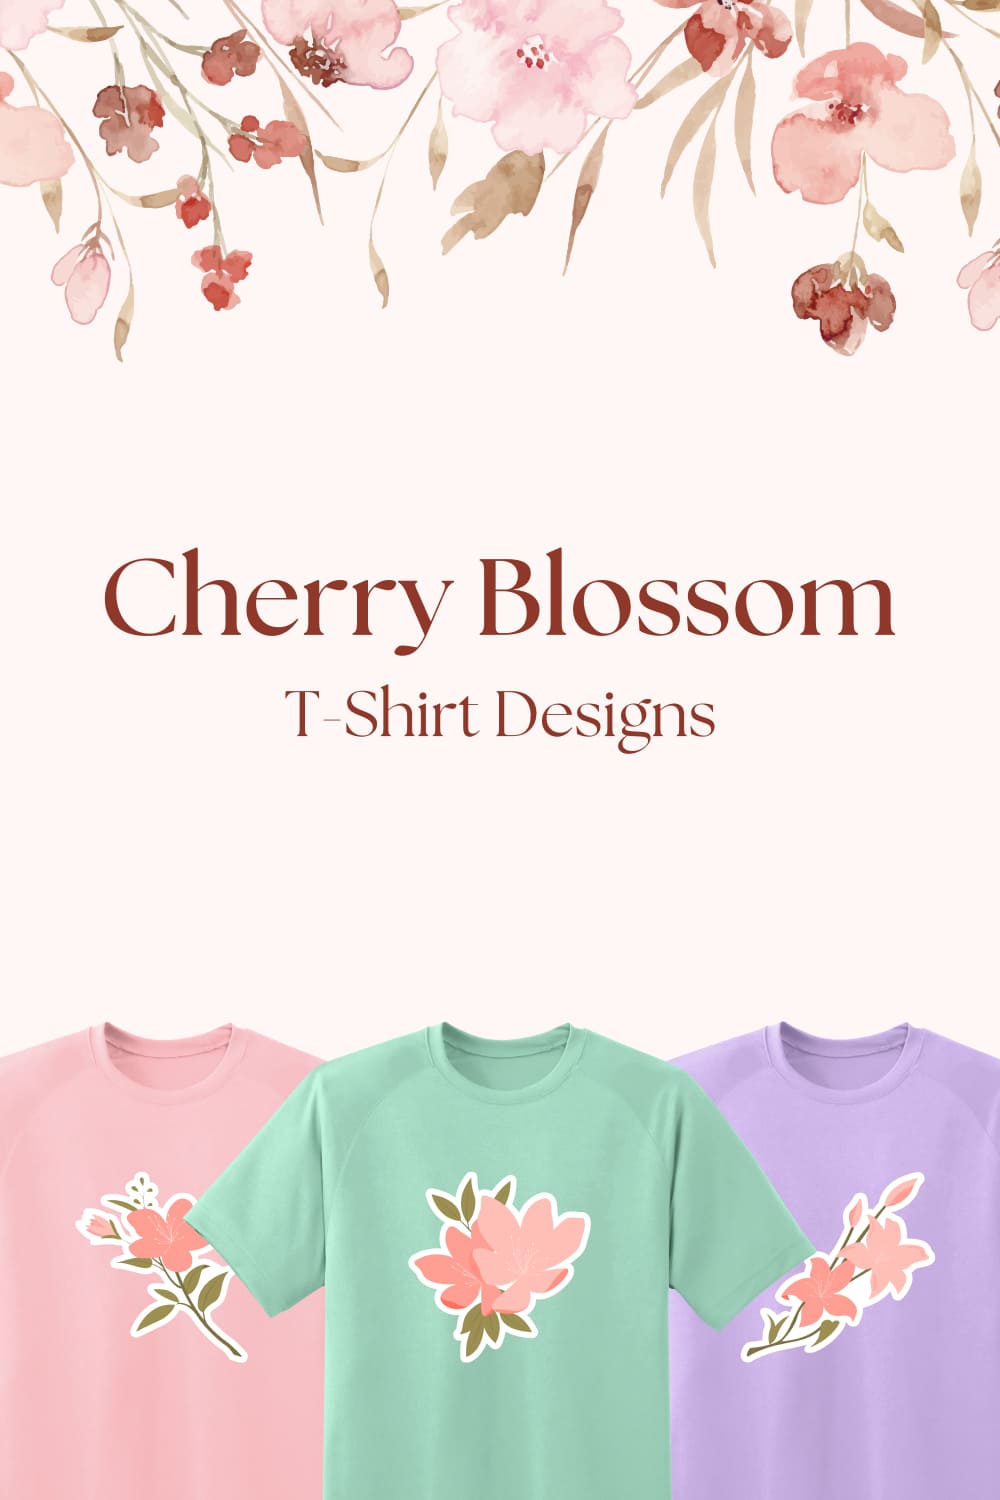 Cherry blossom t shirt designs images of pinterest.